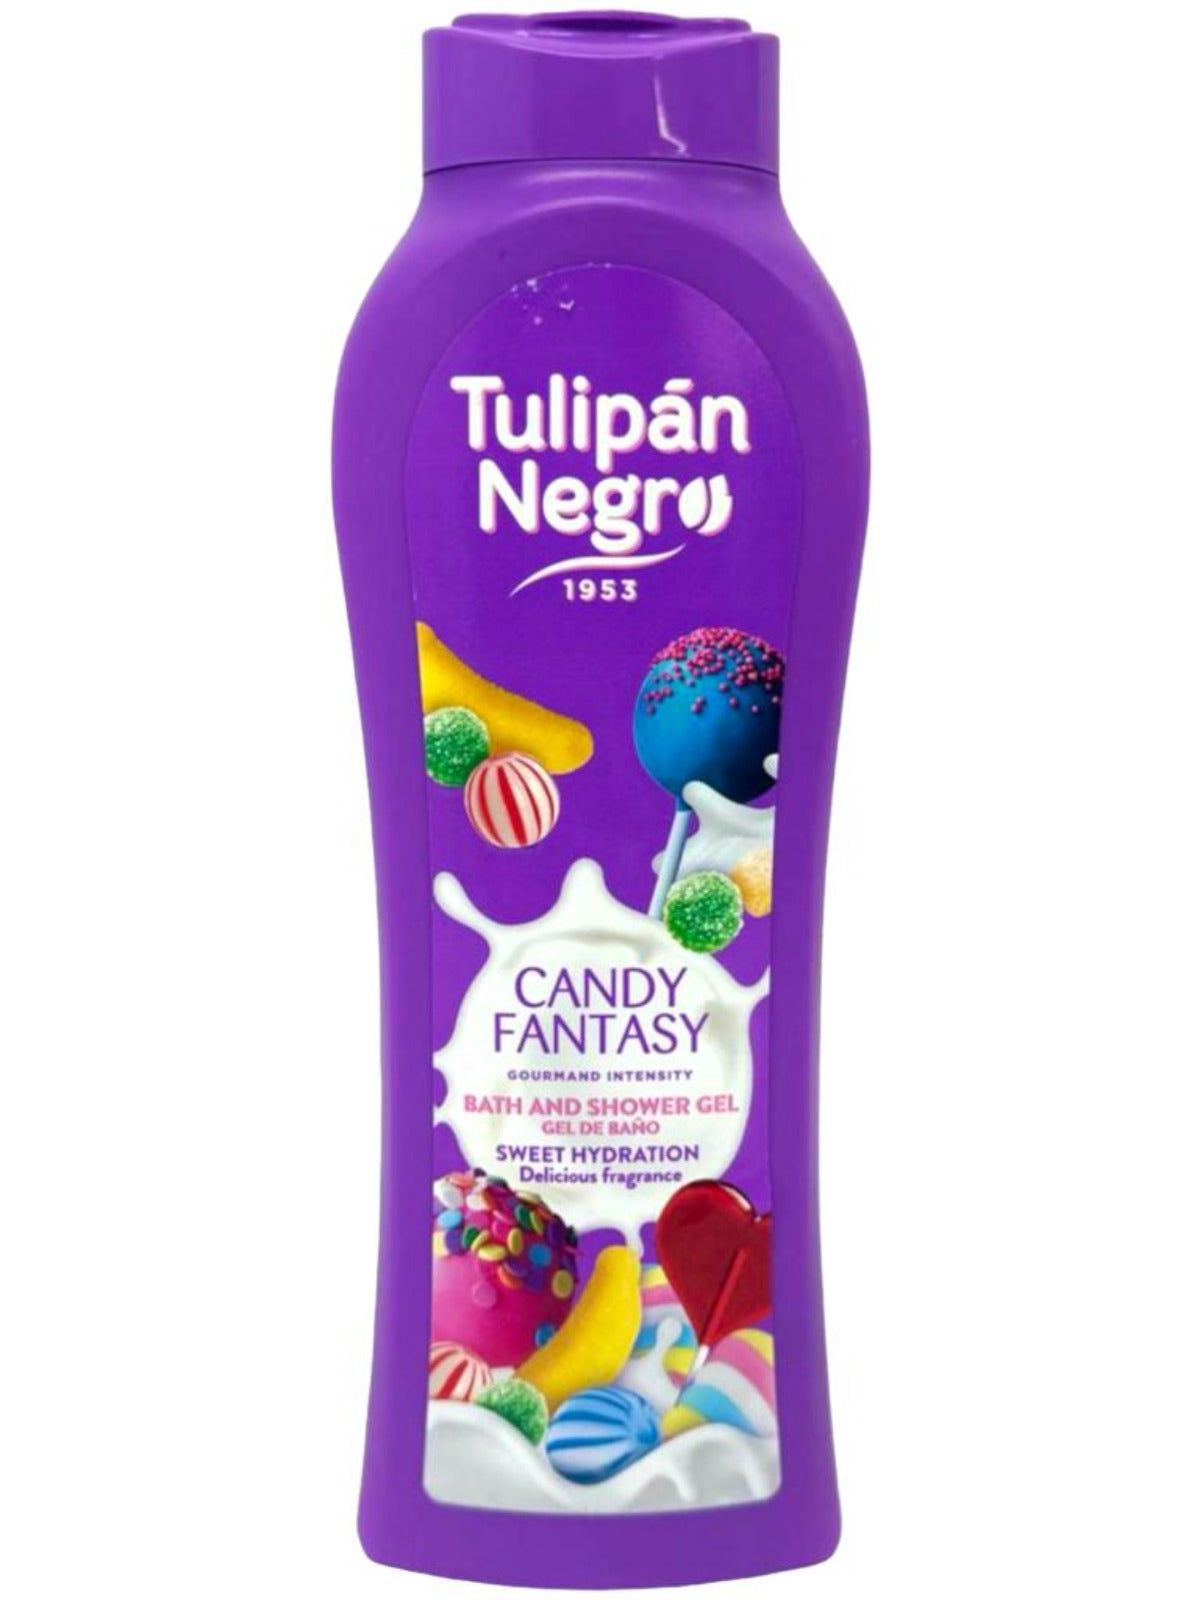 Tulipan Negro Candy Fantasy Spanish Bath And Shower Gel 650ml